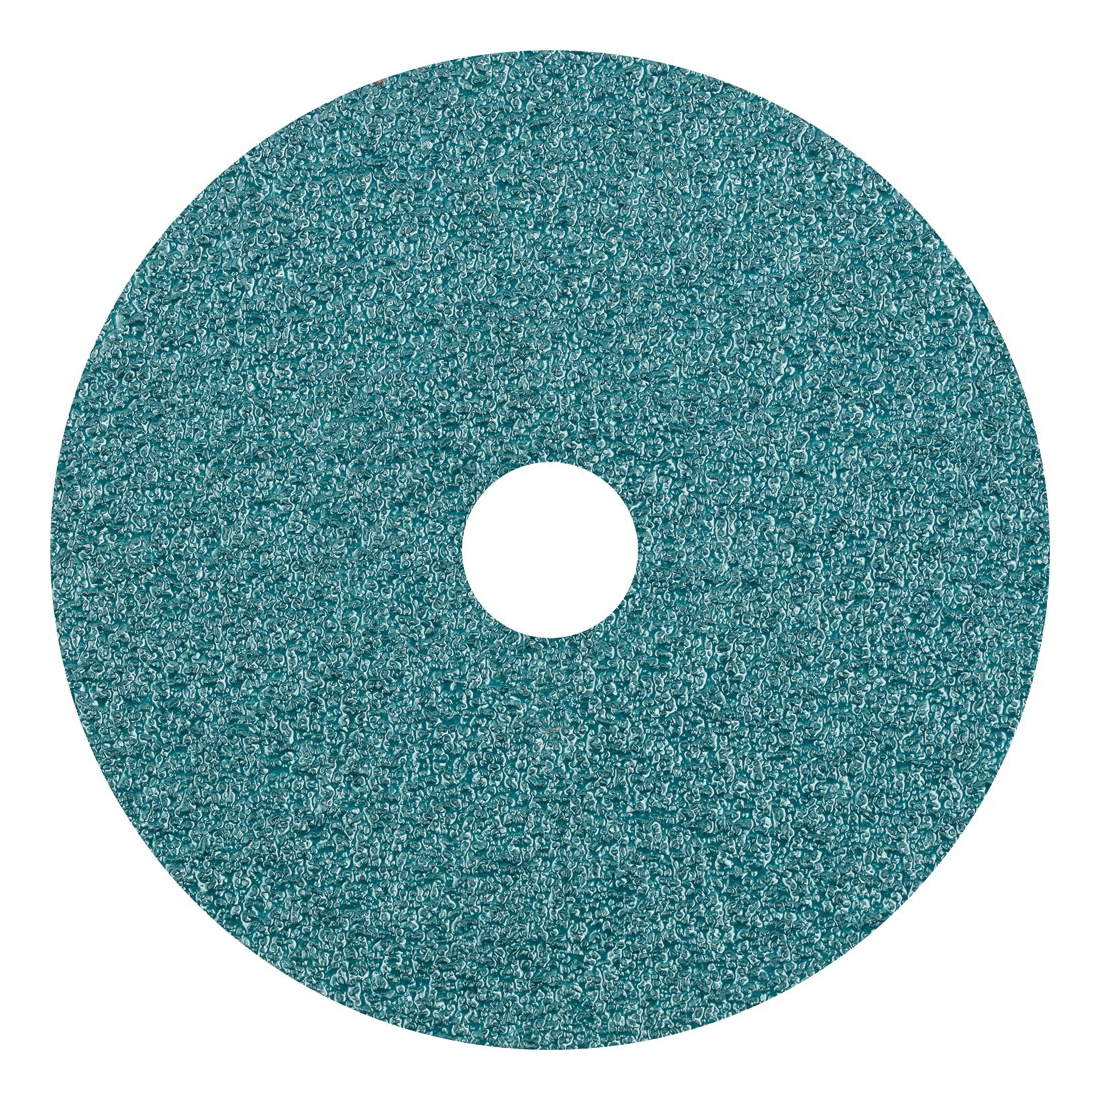 PFERD 62523 Standard Coated Abrasive Disc, 5 in Dia, 7/8 in Center Hole, 36 Grit, Zirconia Alumina Abrasive, Arbor Attachment